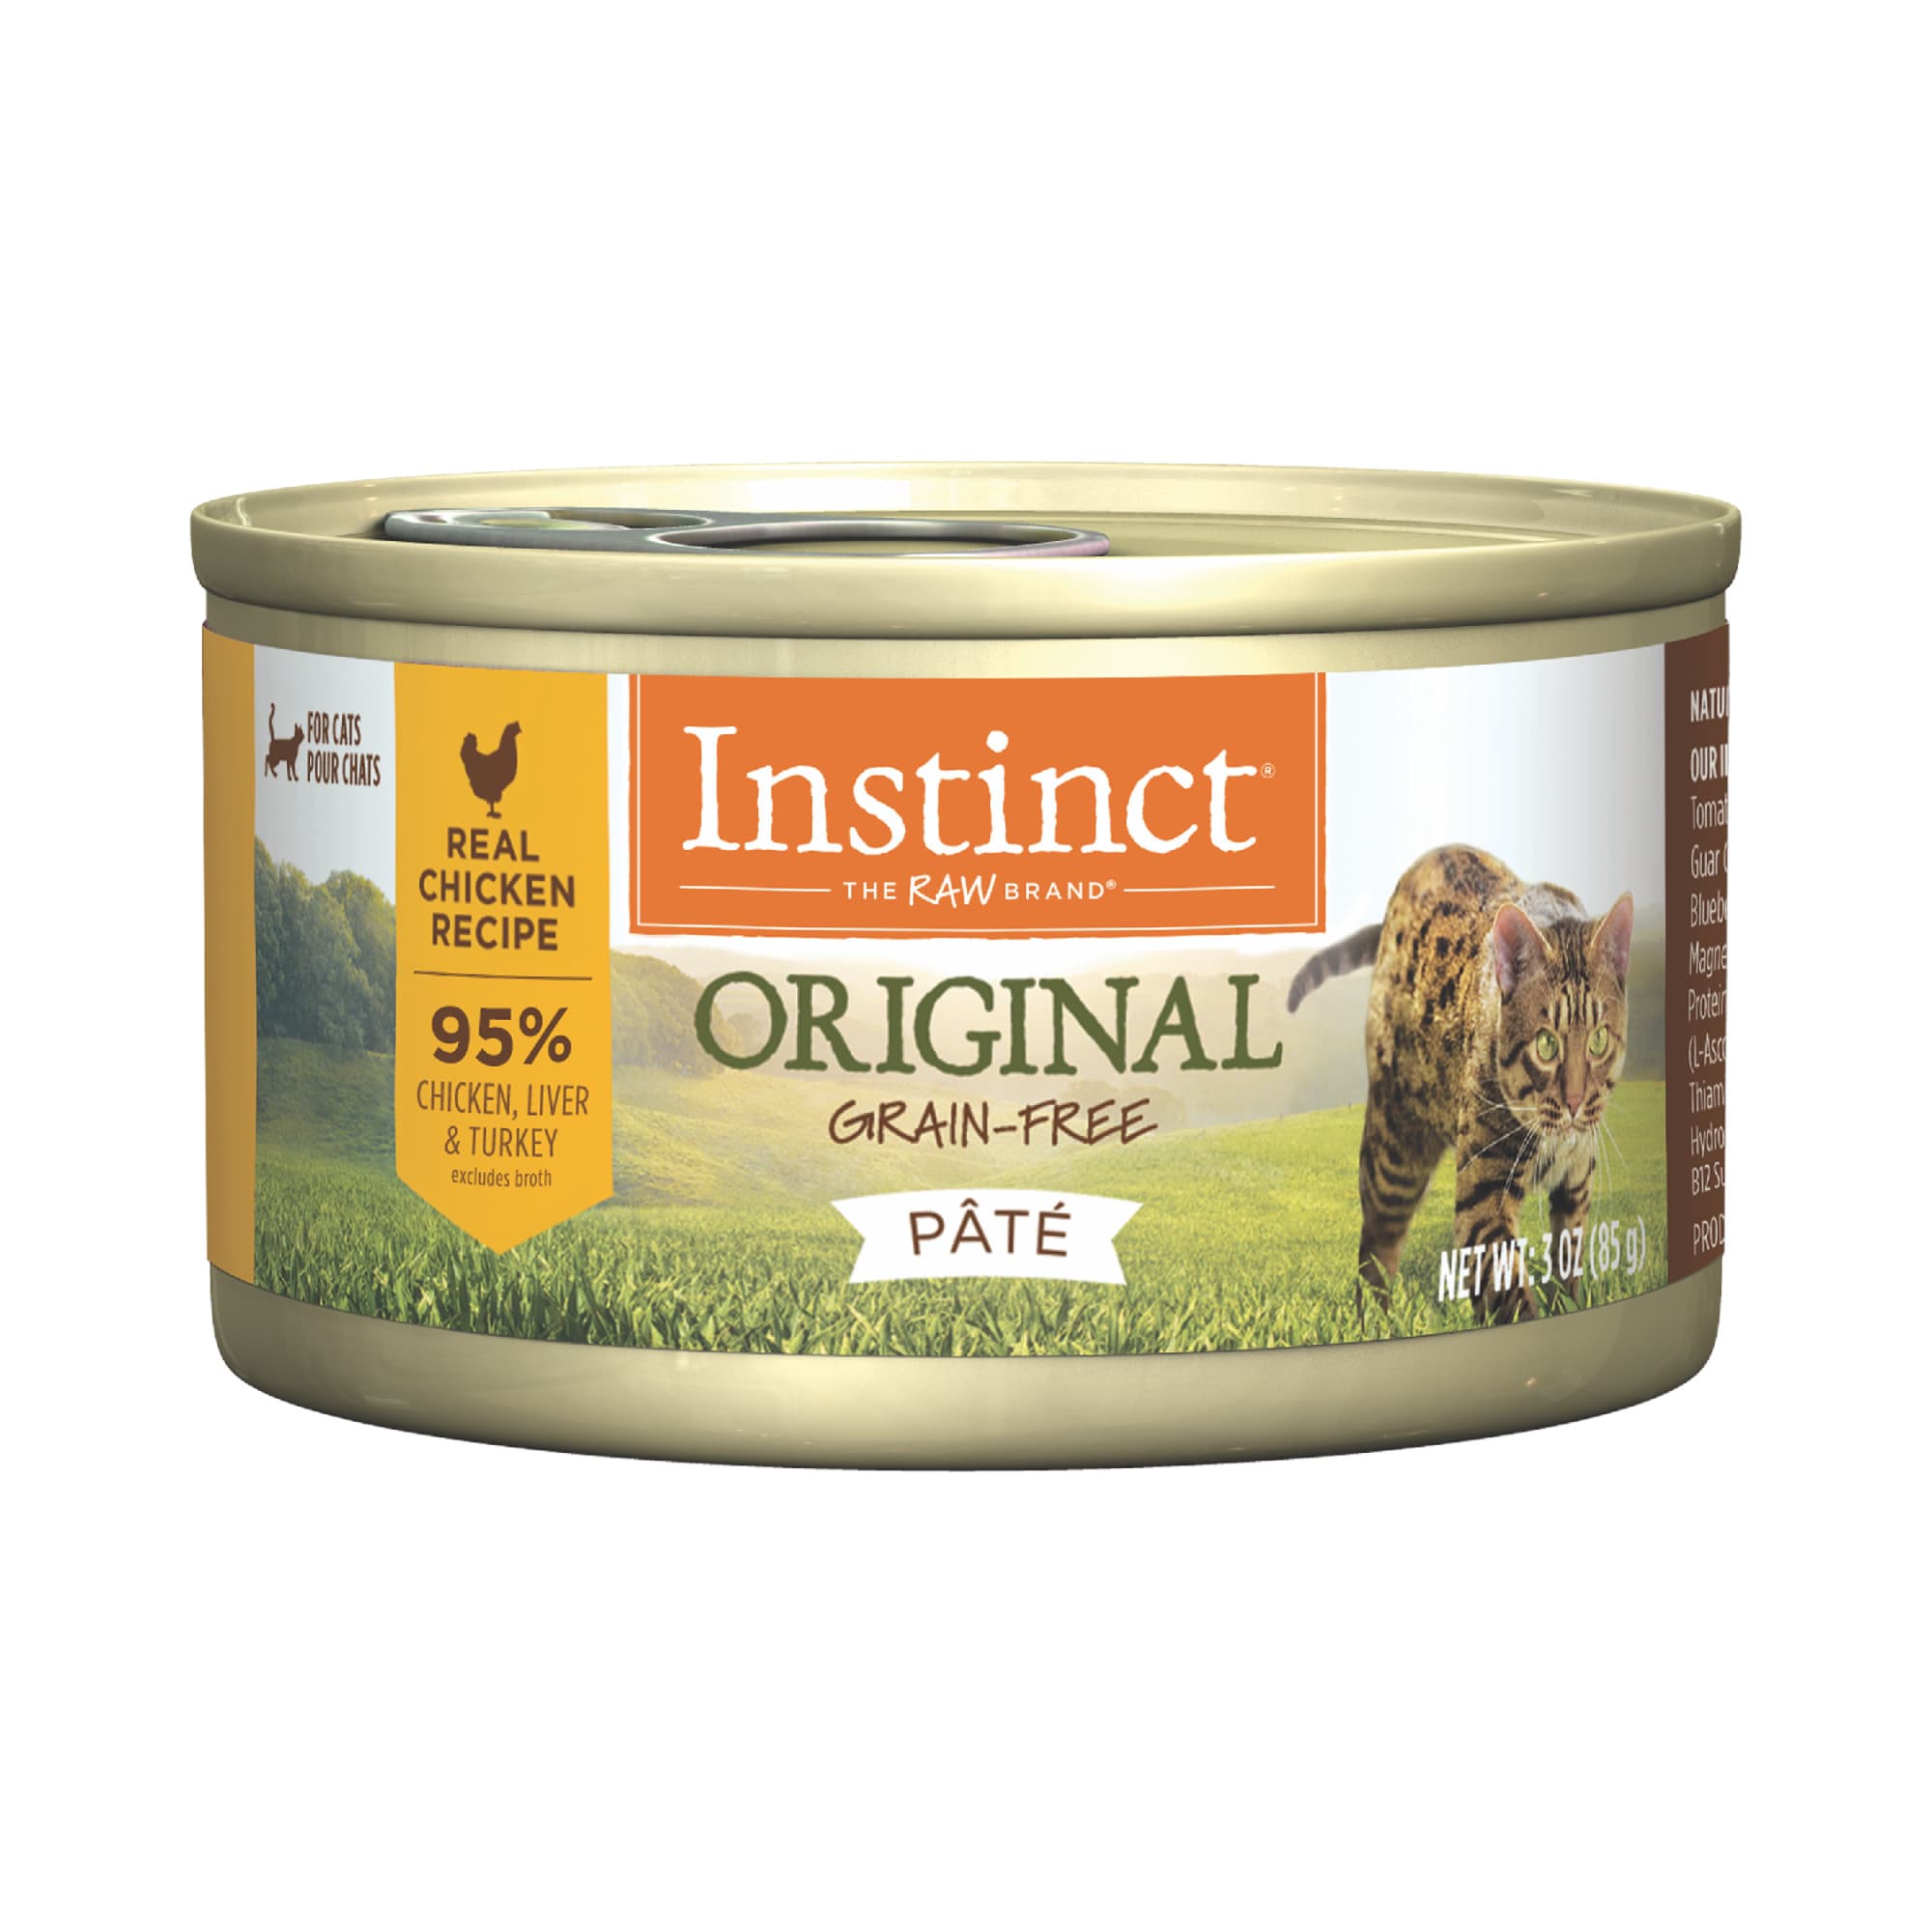 Instinct Original GrainFree Pate Real Chicken Recipe Wet Cat Food, 3